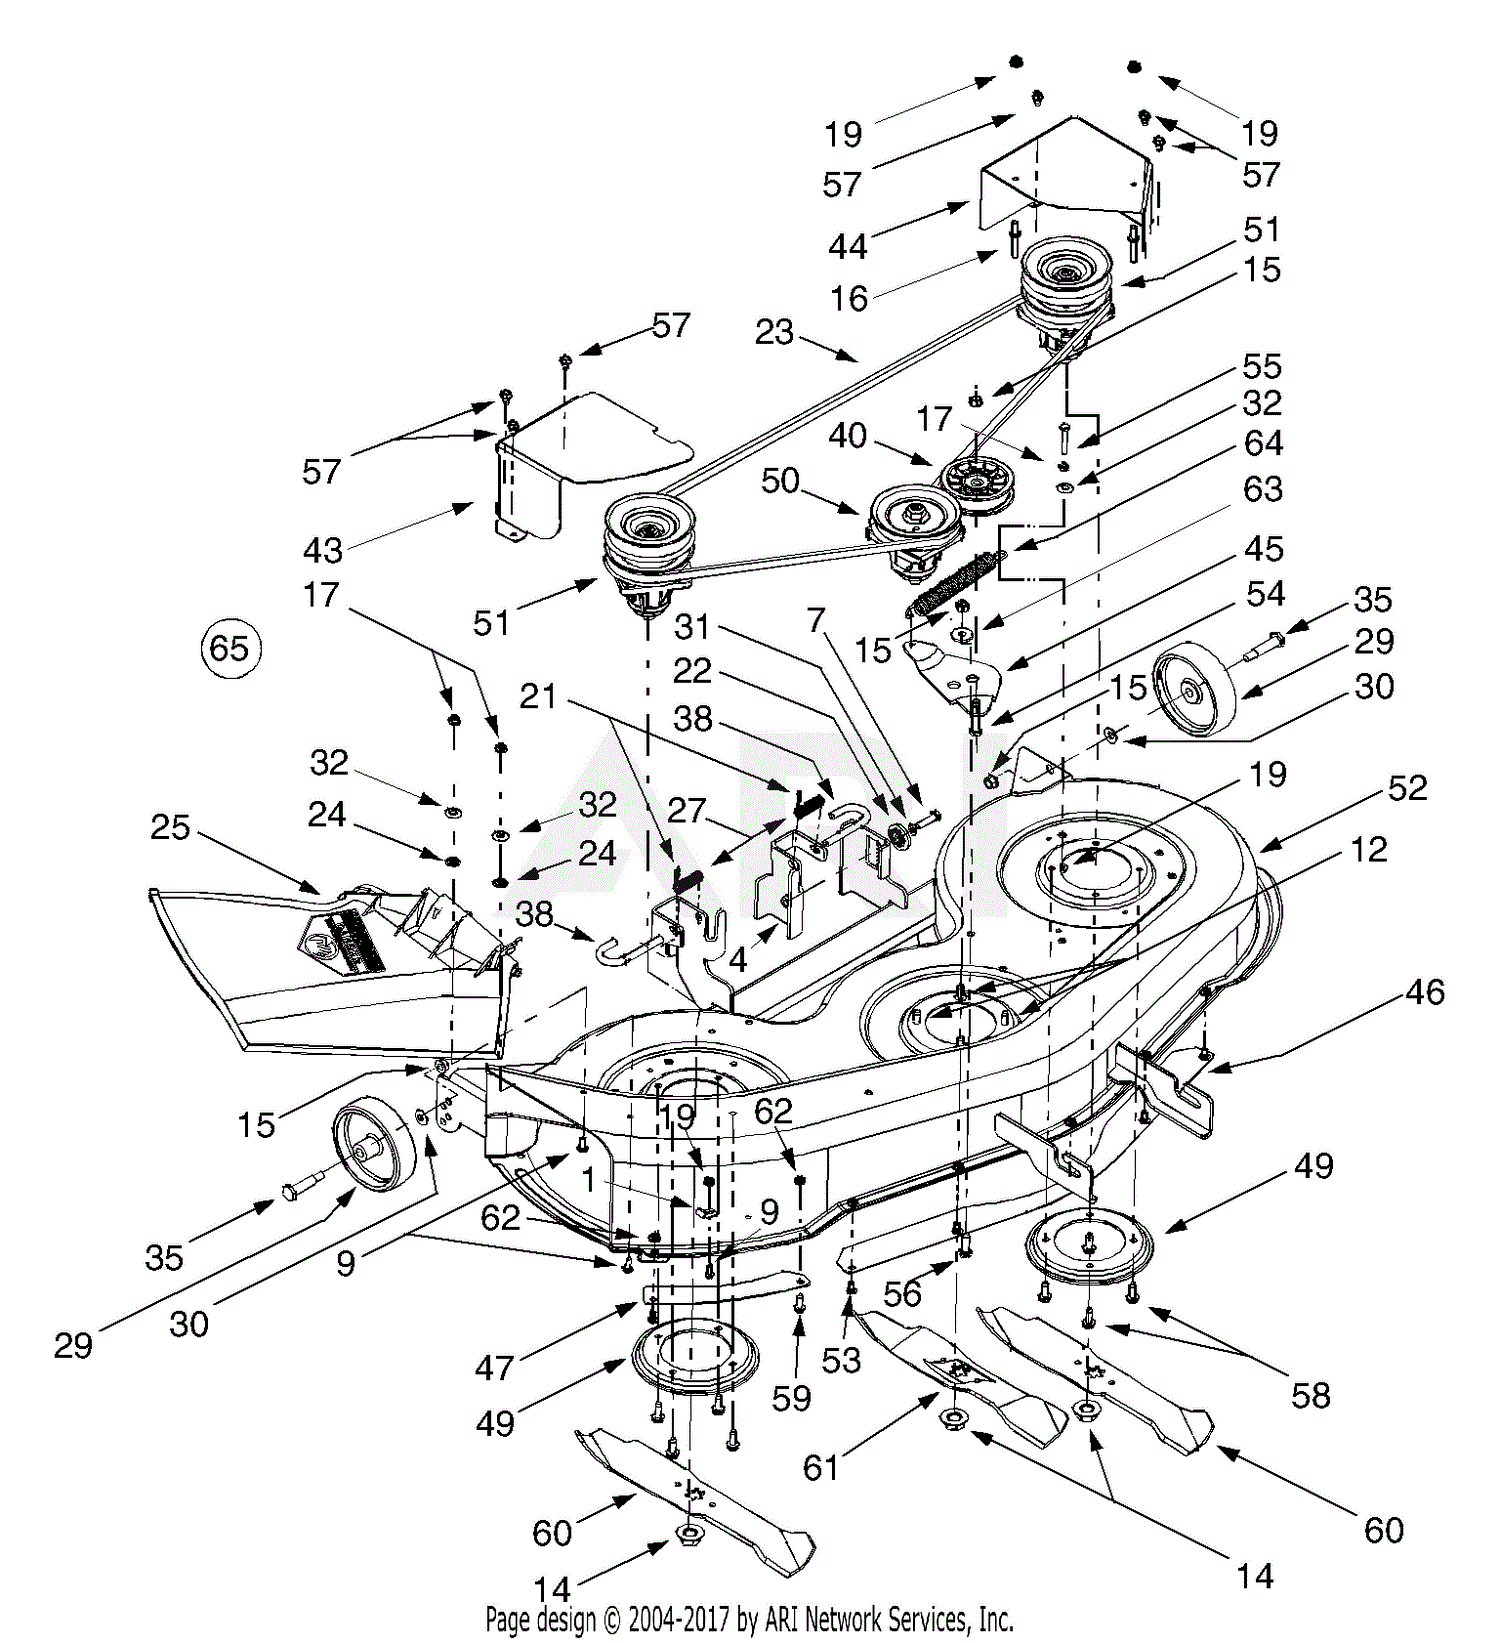 wiring diagram for cub cadet rzt 50